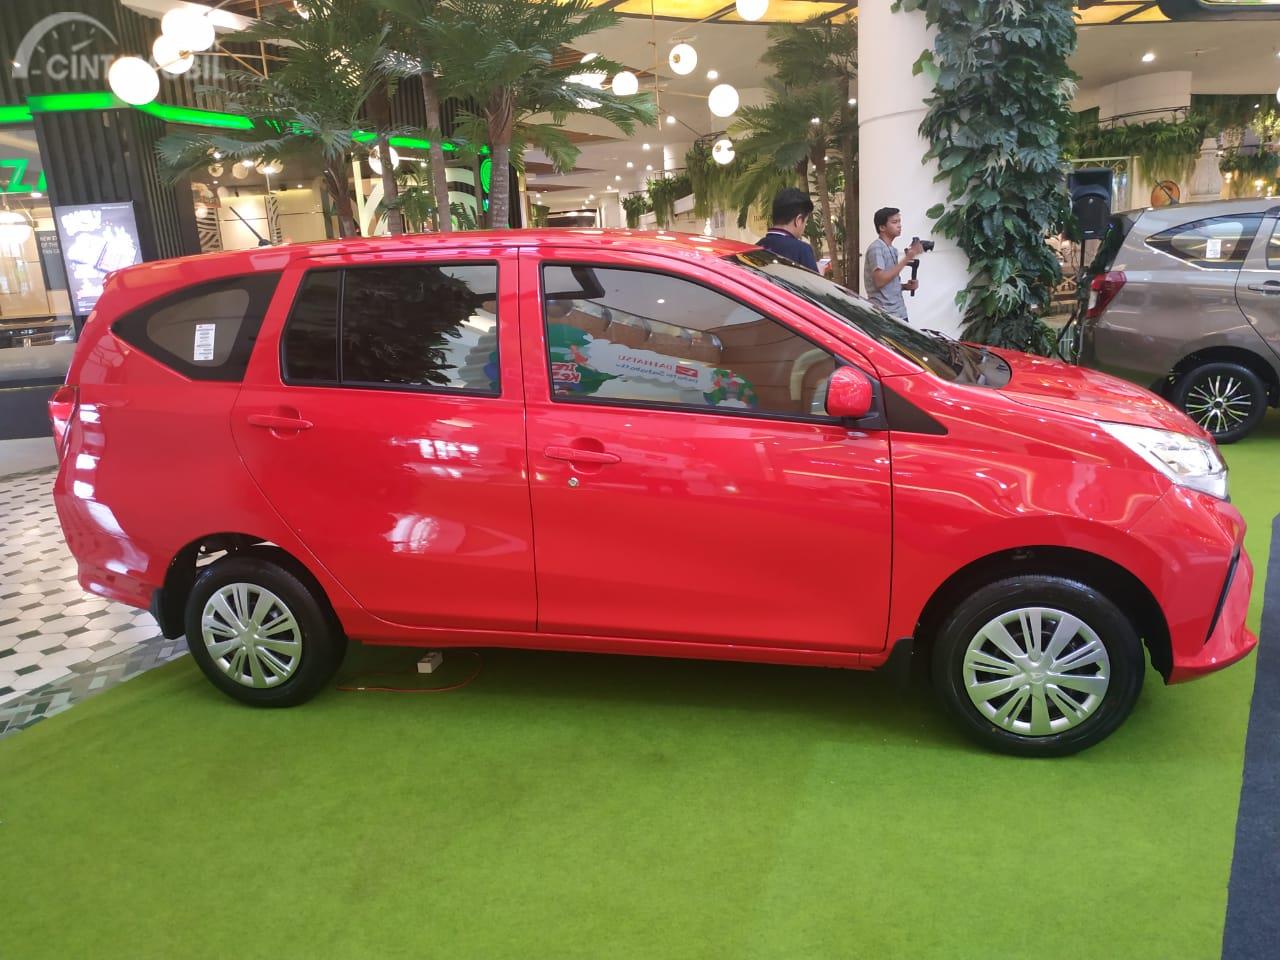 Review New Daihatsu Sigra 1 0 M M T 2019